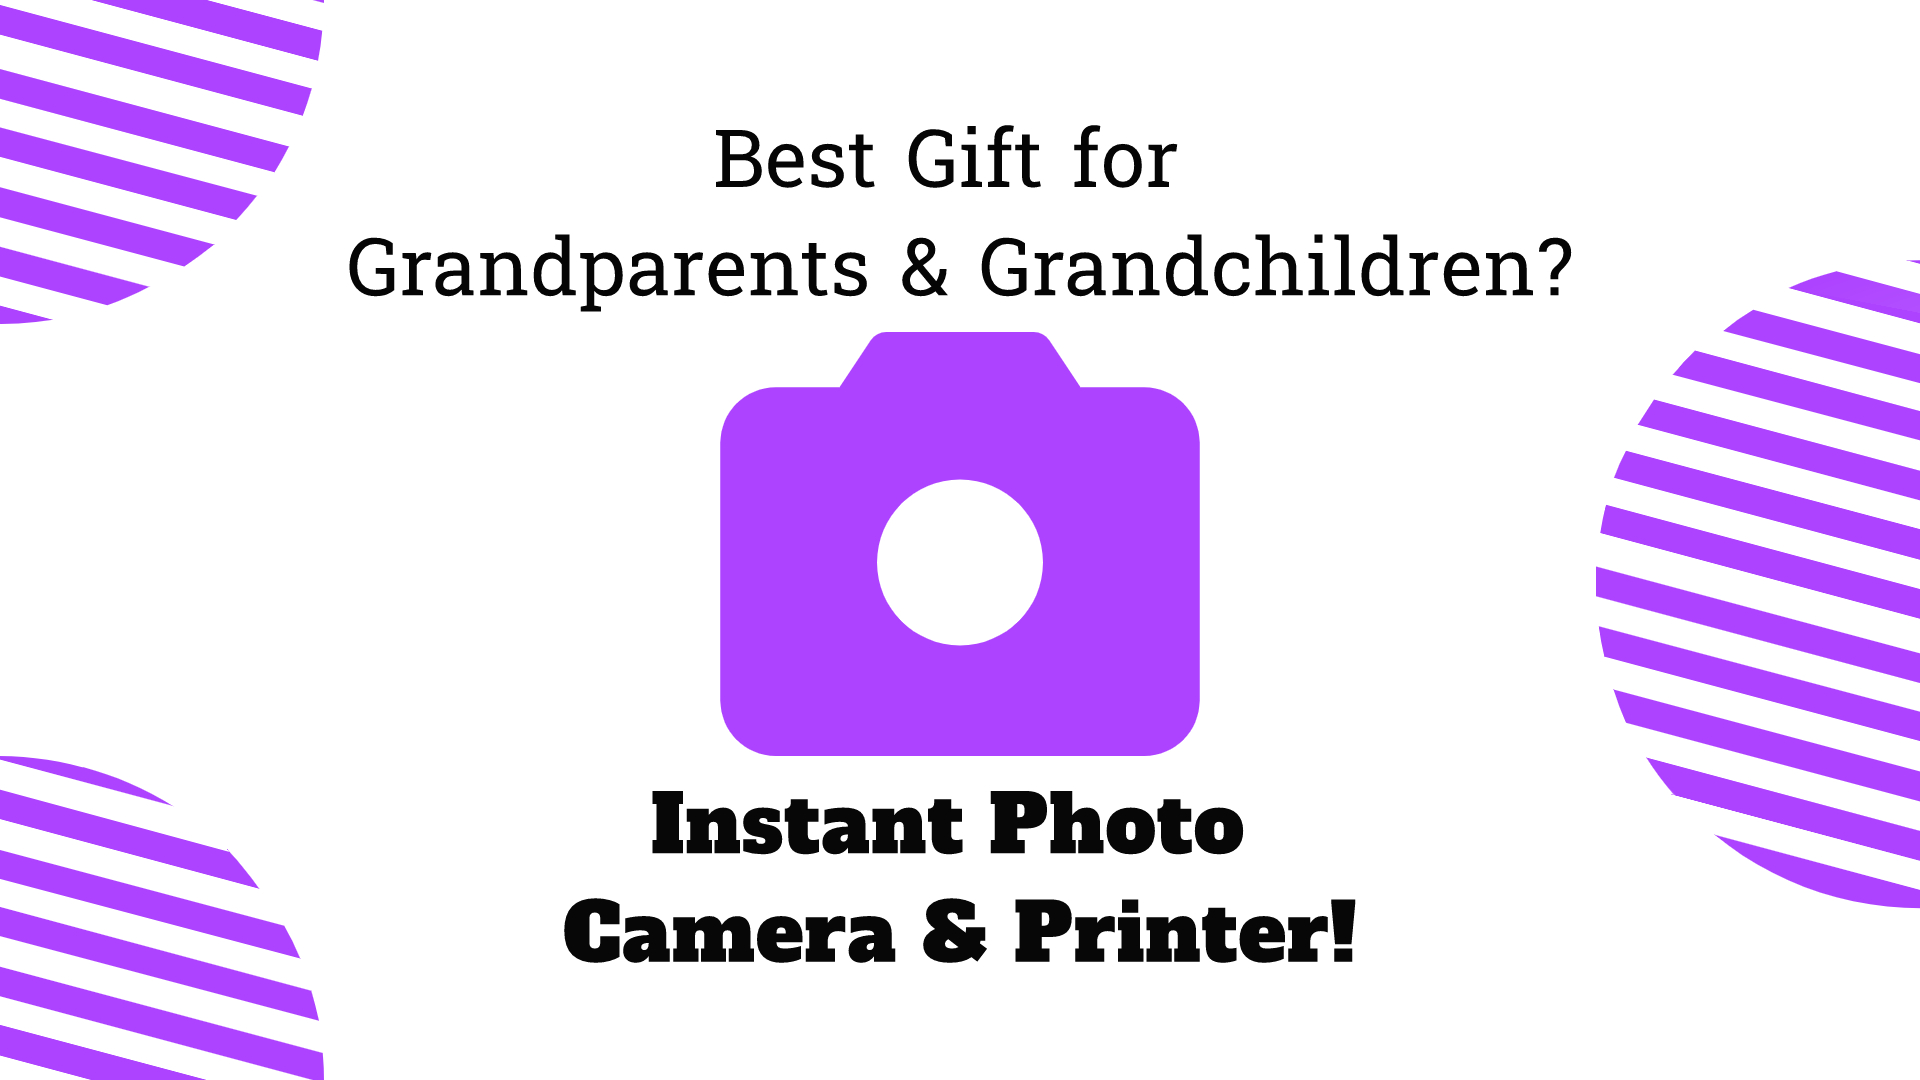 Instant Photo Camera & Printer - Best Gift for Grandparents & Grandchildren